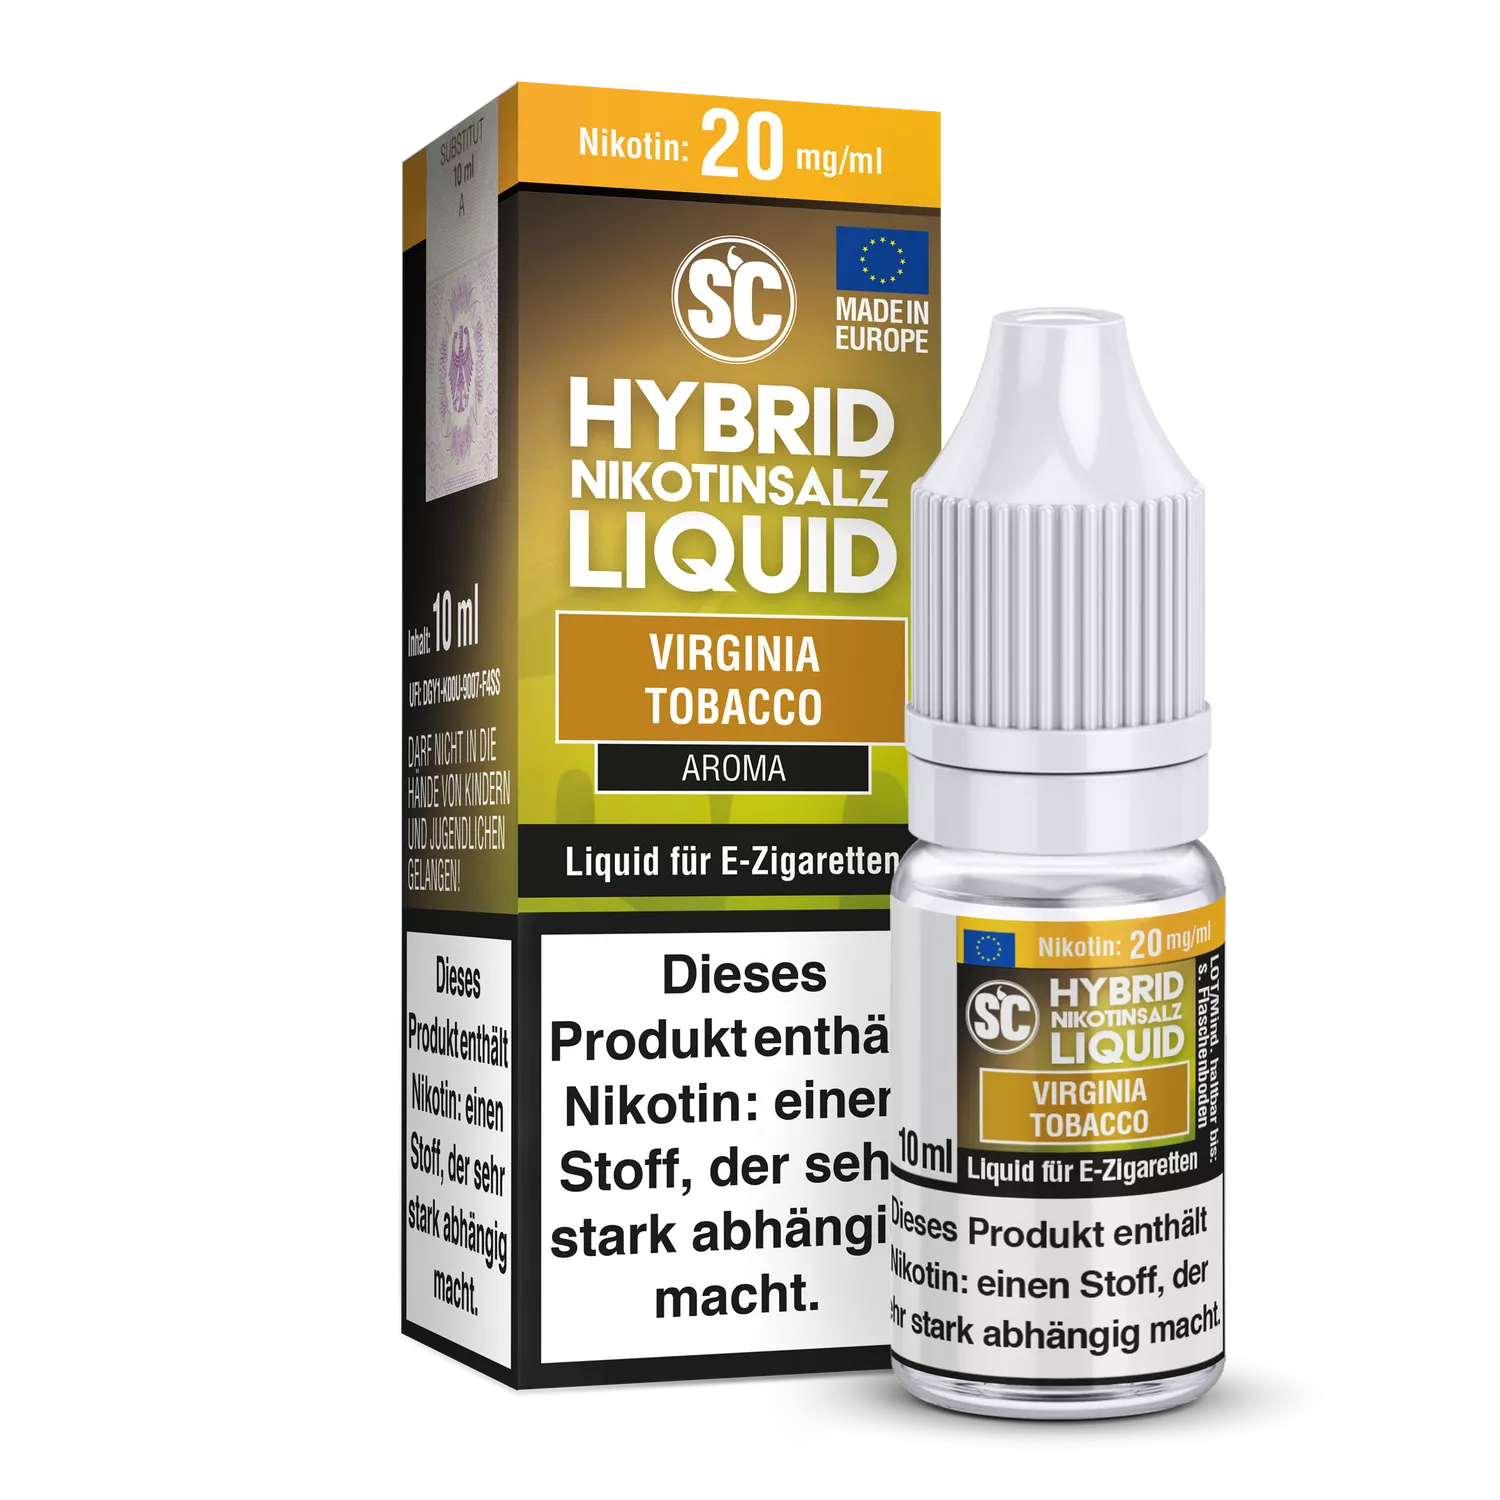 SC Hybrid Nikotinsalz Liquid Virginia Tobacco - 20mg/ml